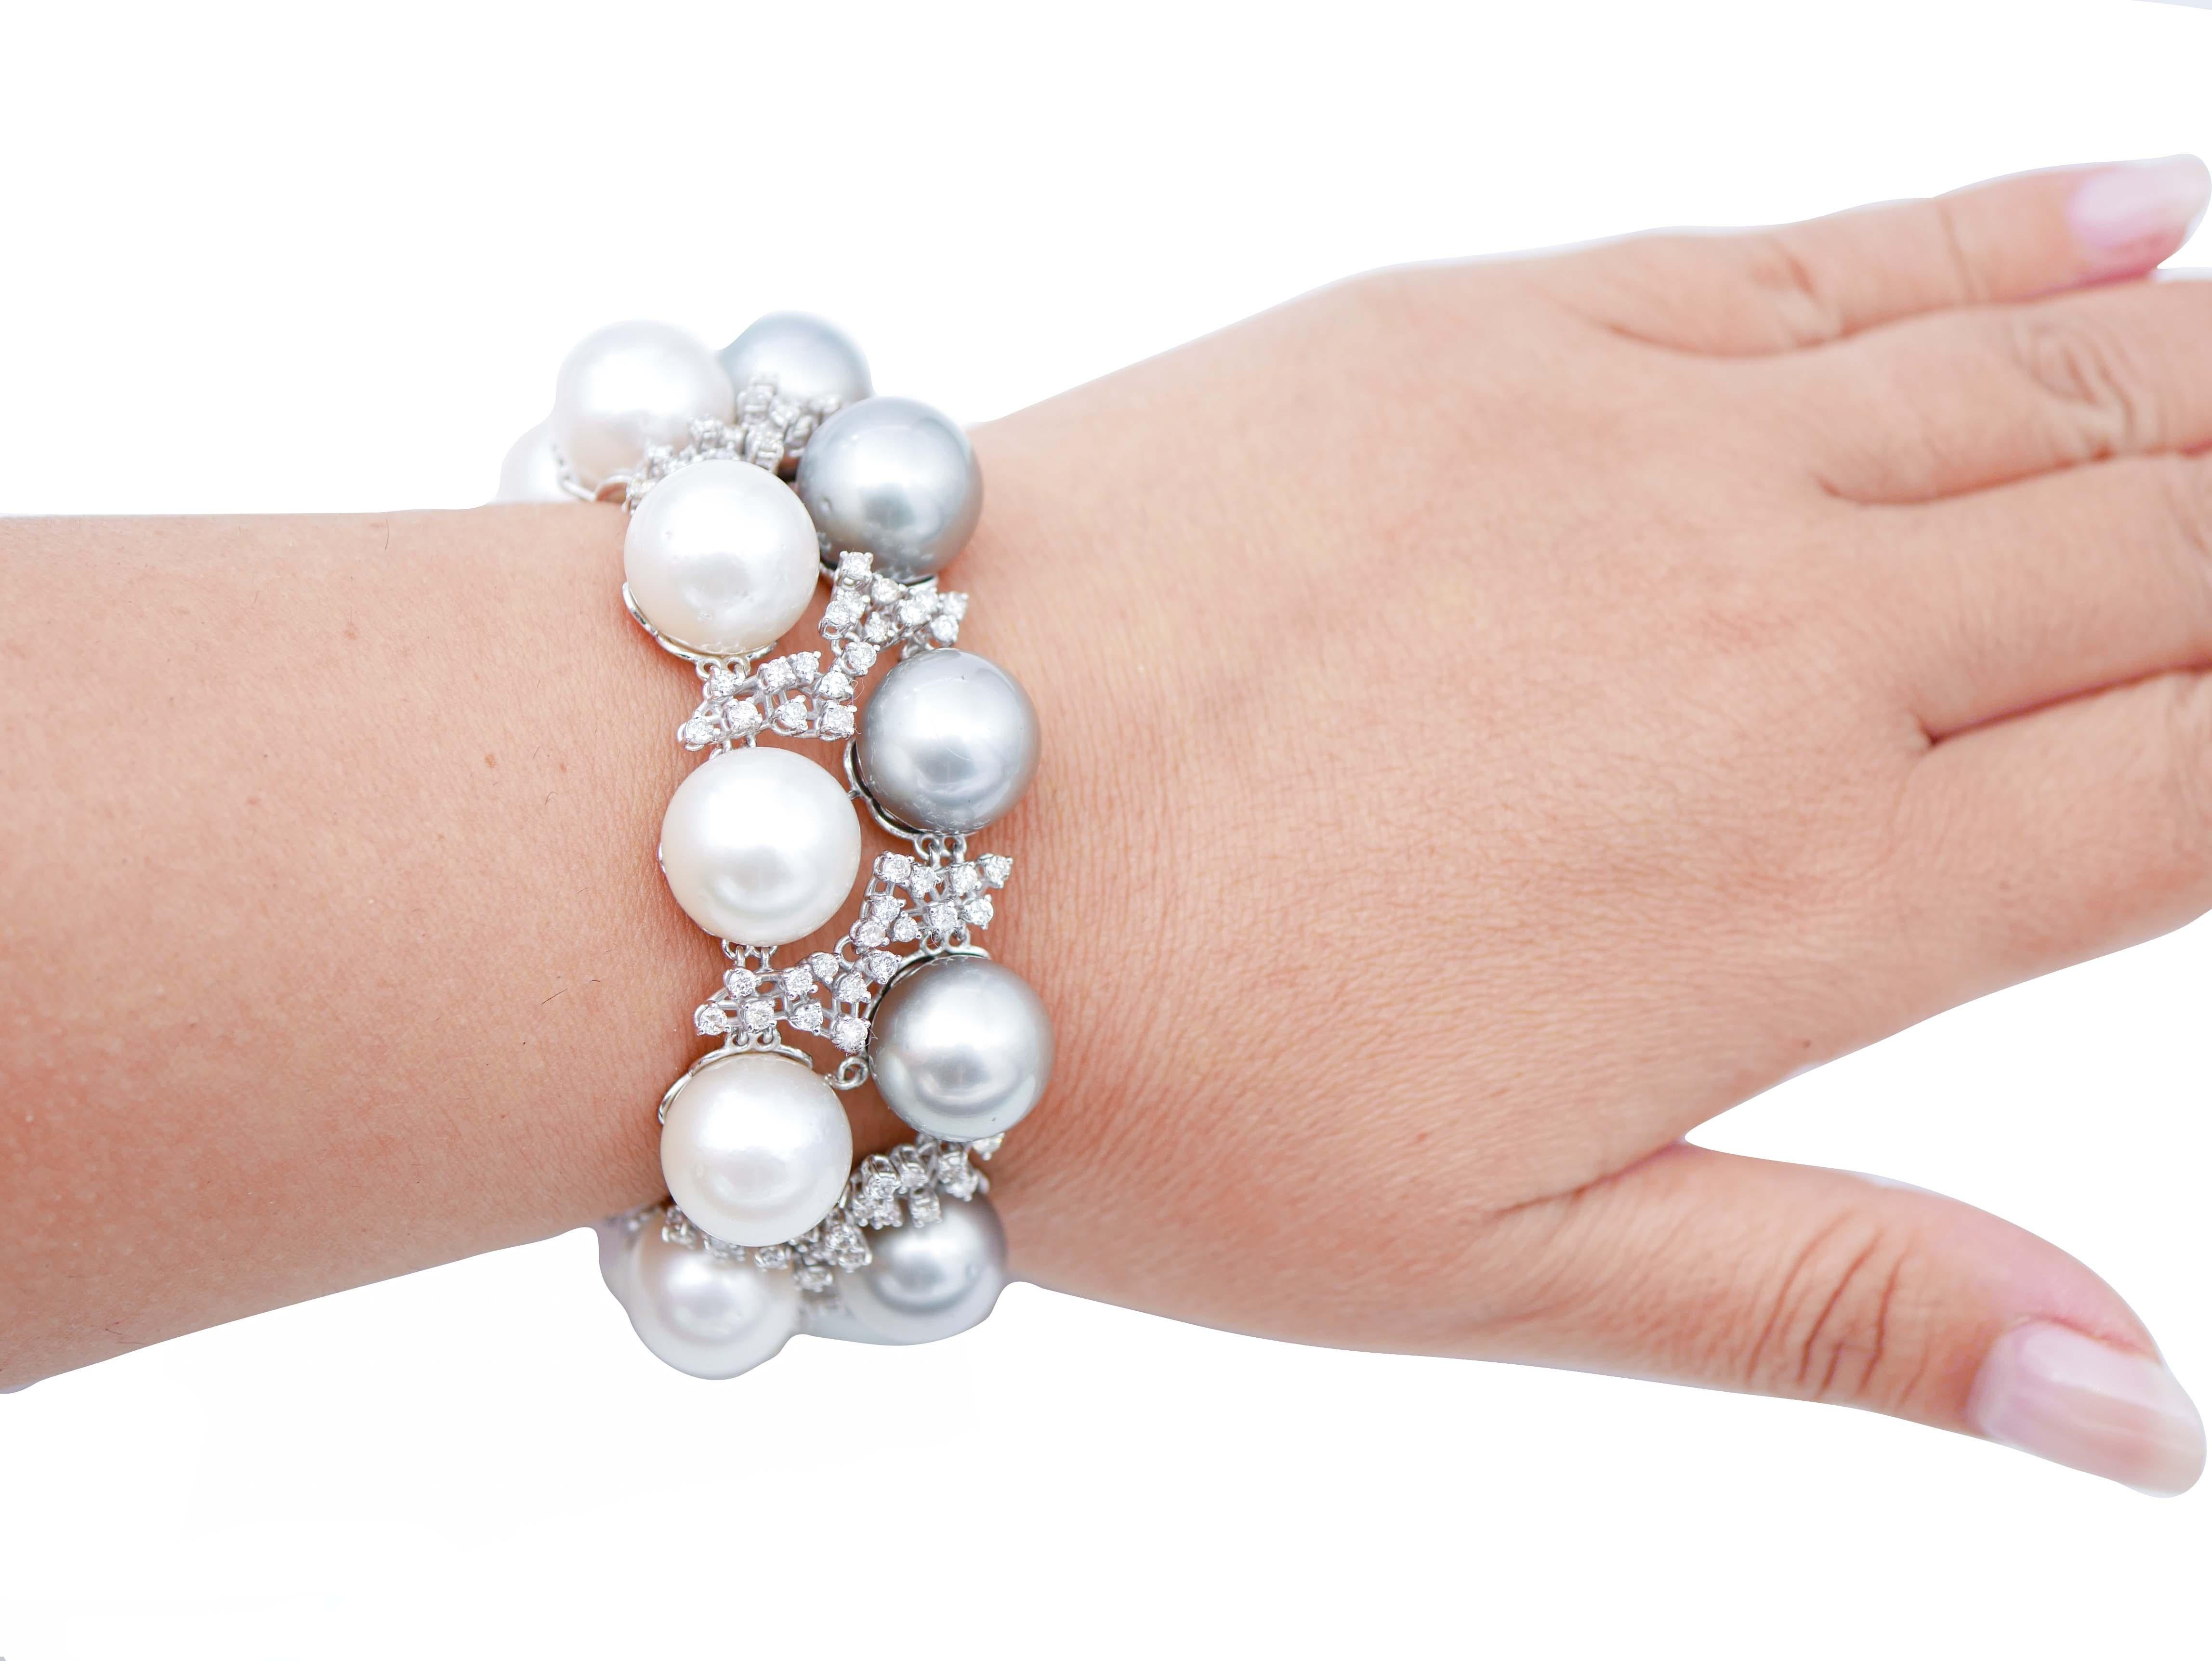 Mixed Cut South-Sea Pearls, Grey Pearls, Diamonds, 14 Karat White Gold Bracelet